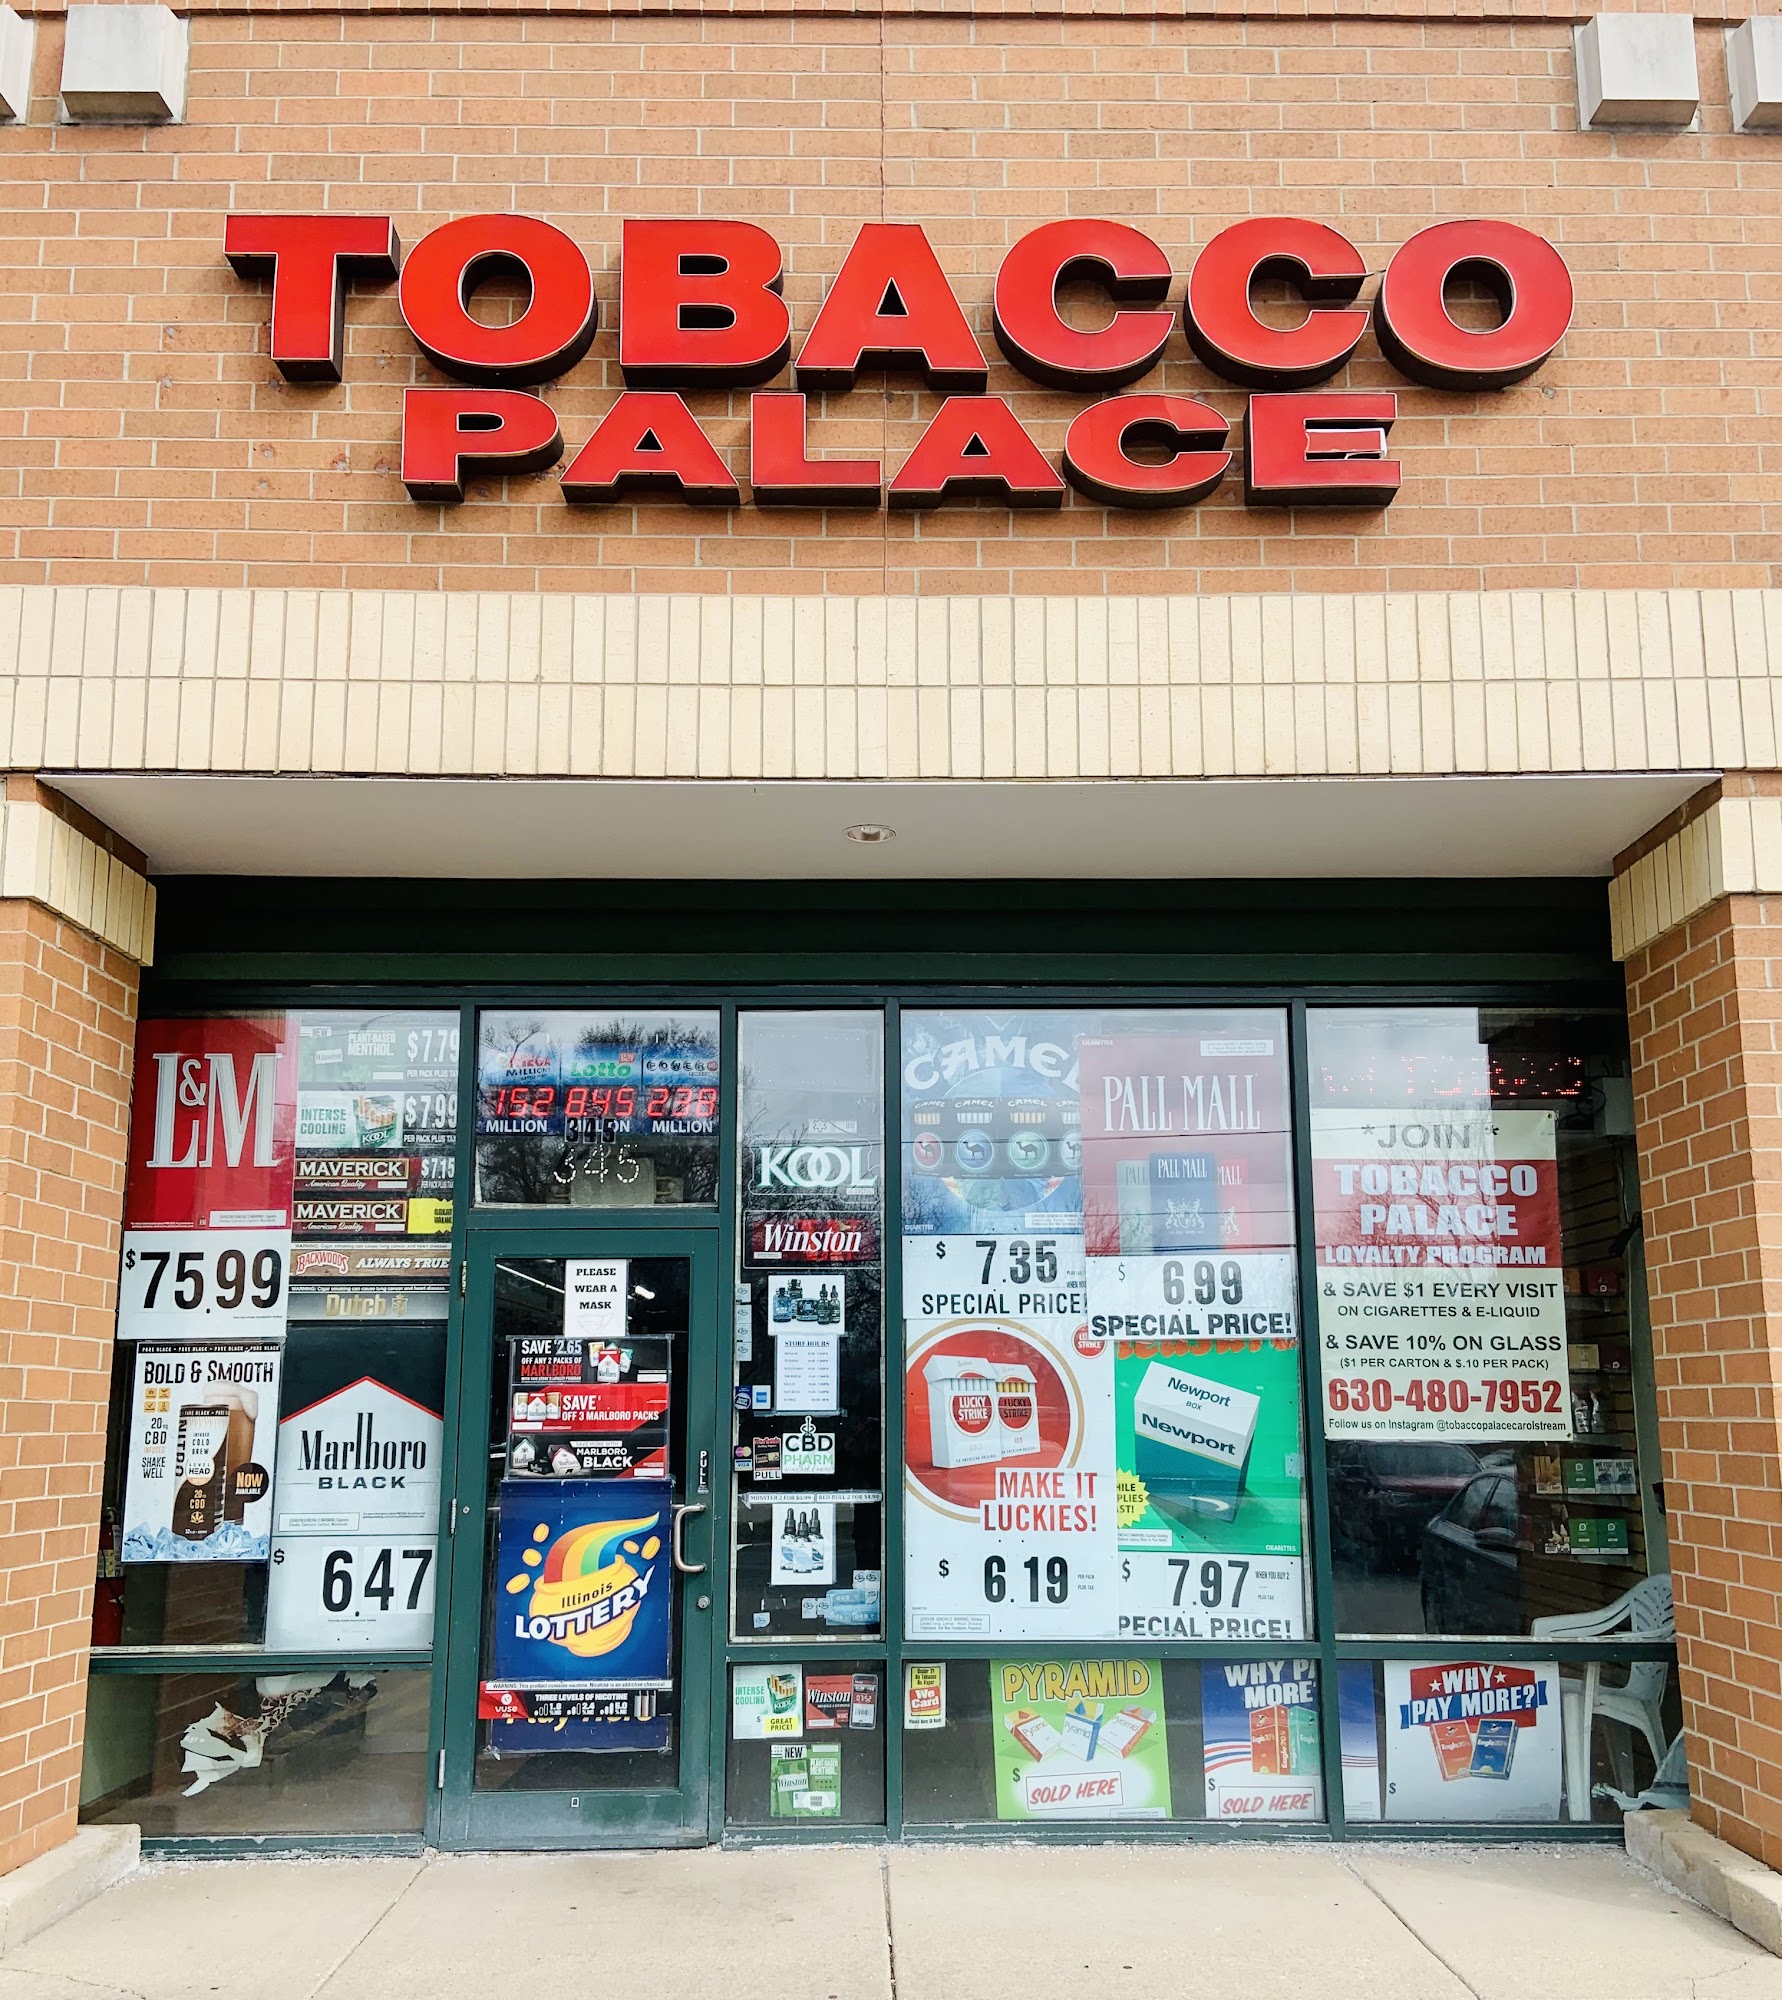 Tobacco Palace